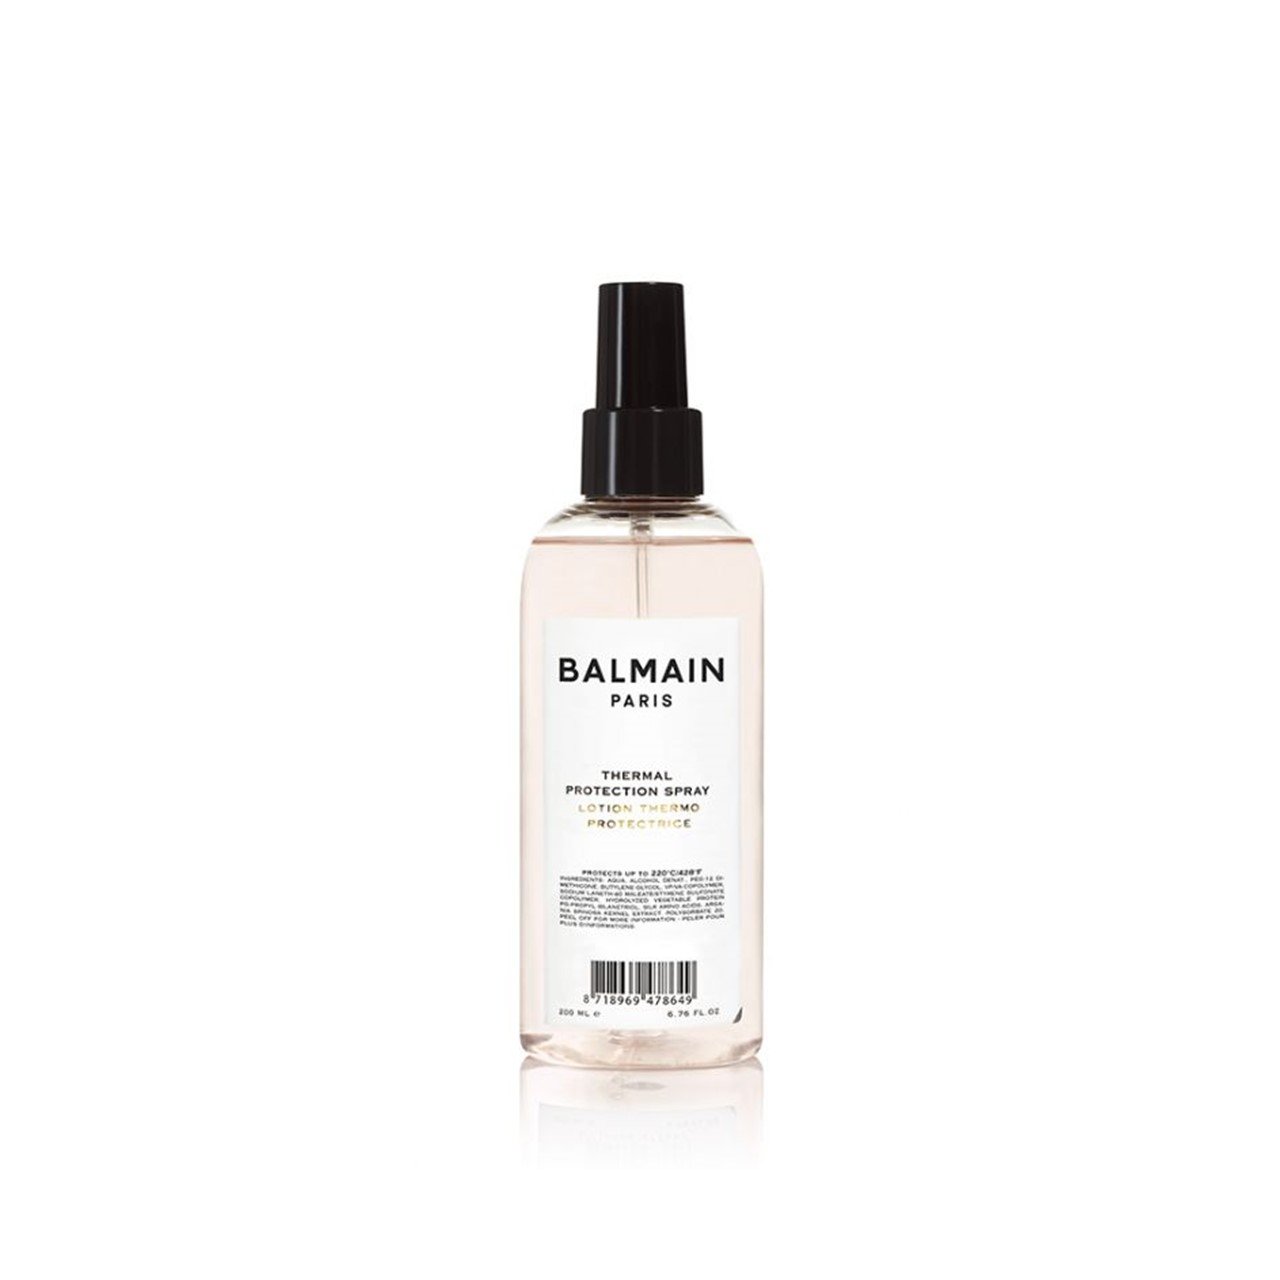 Balmain Hair Thermal Protection Spray 200ml (6.76 fl oz)